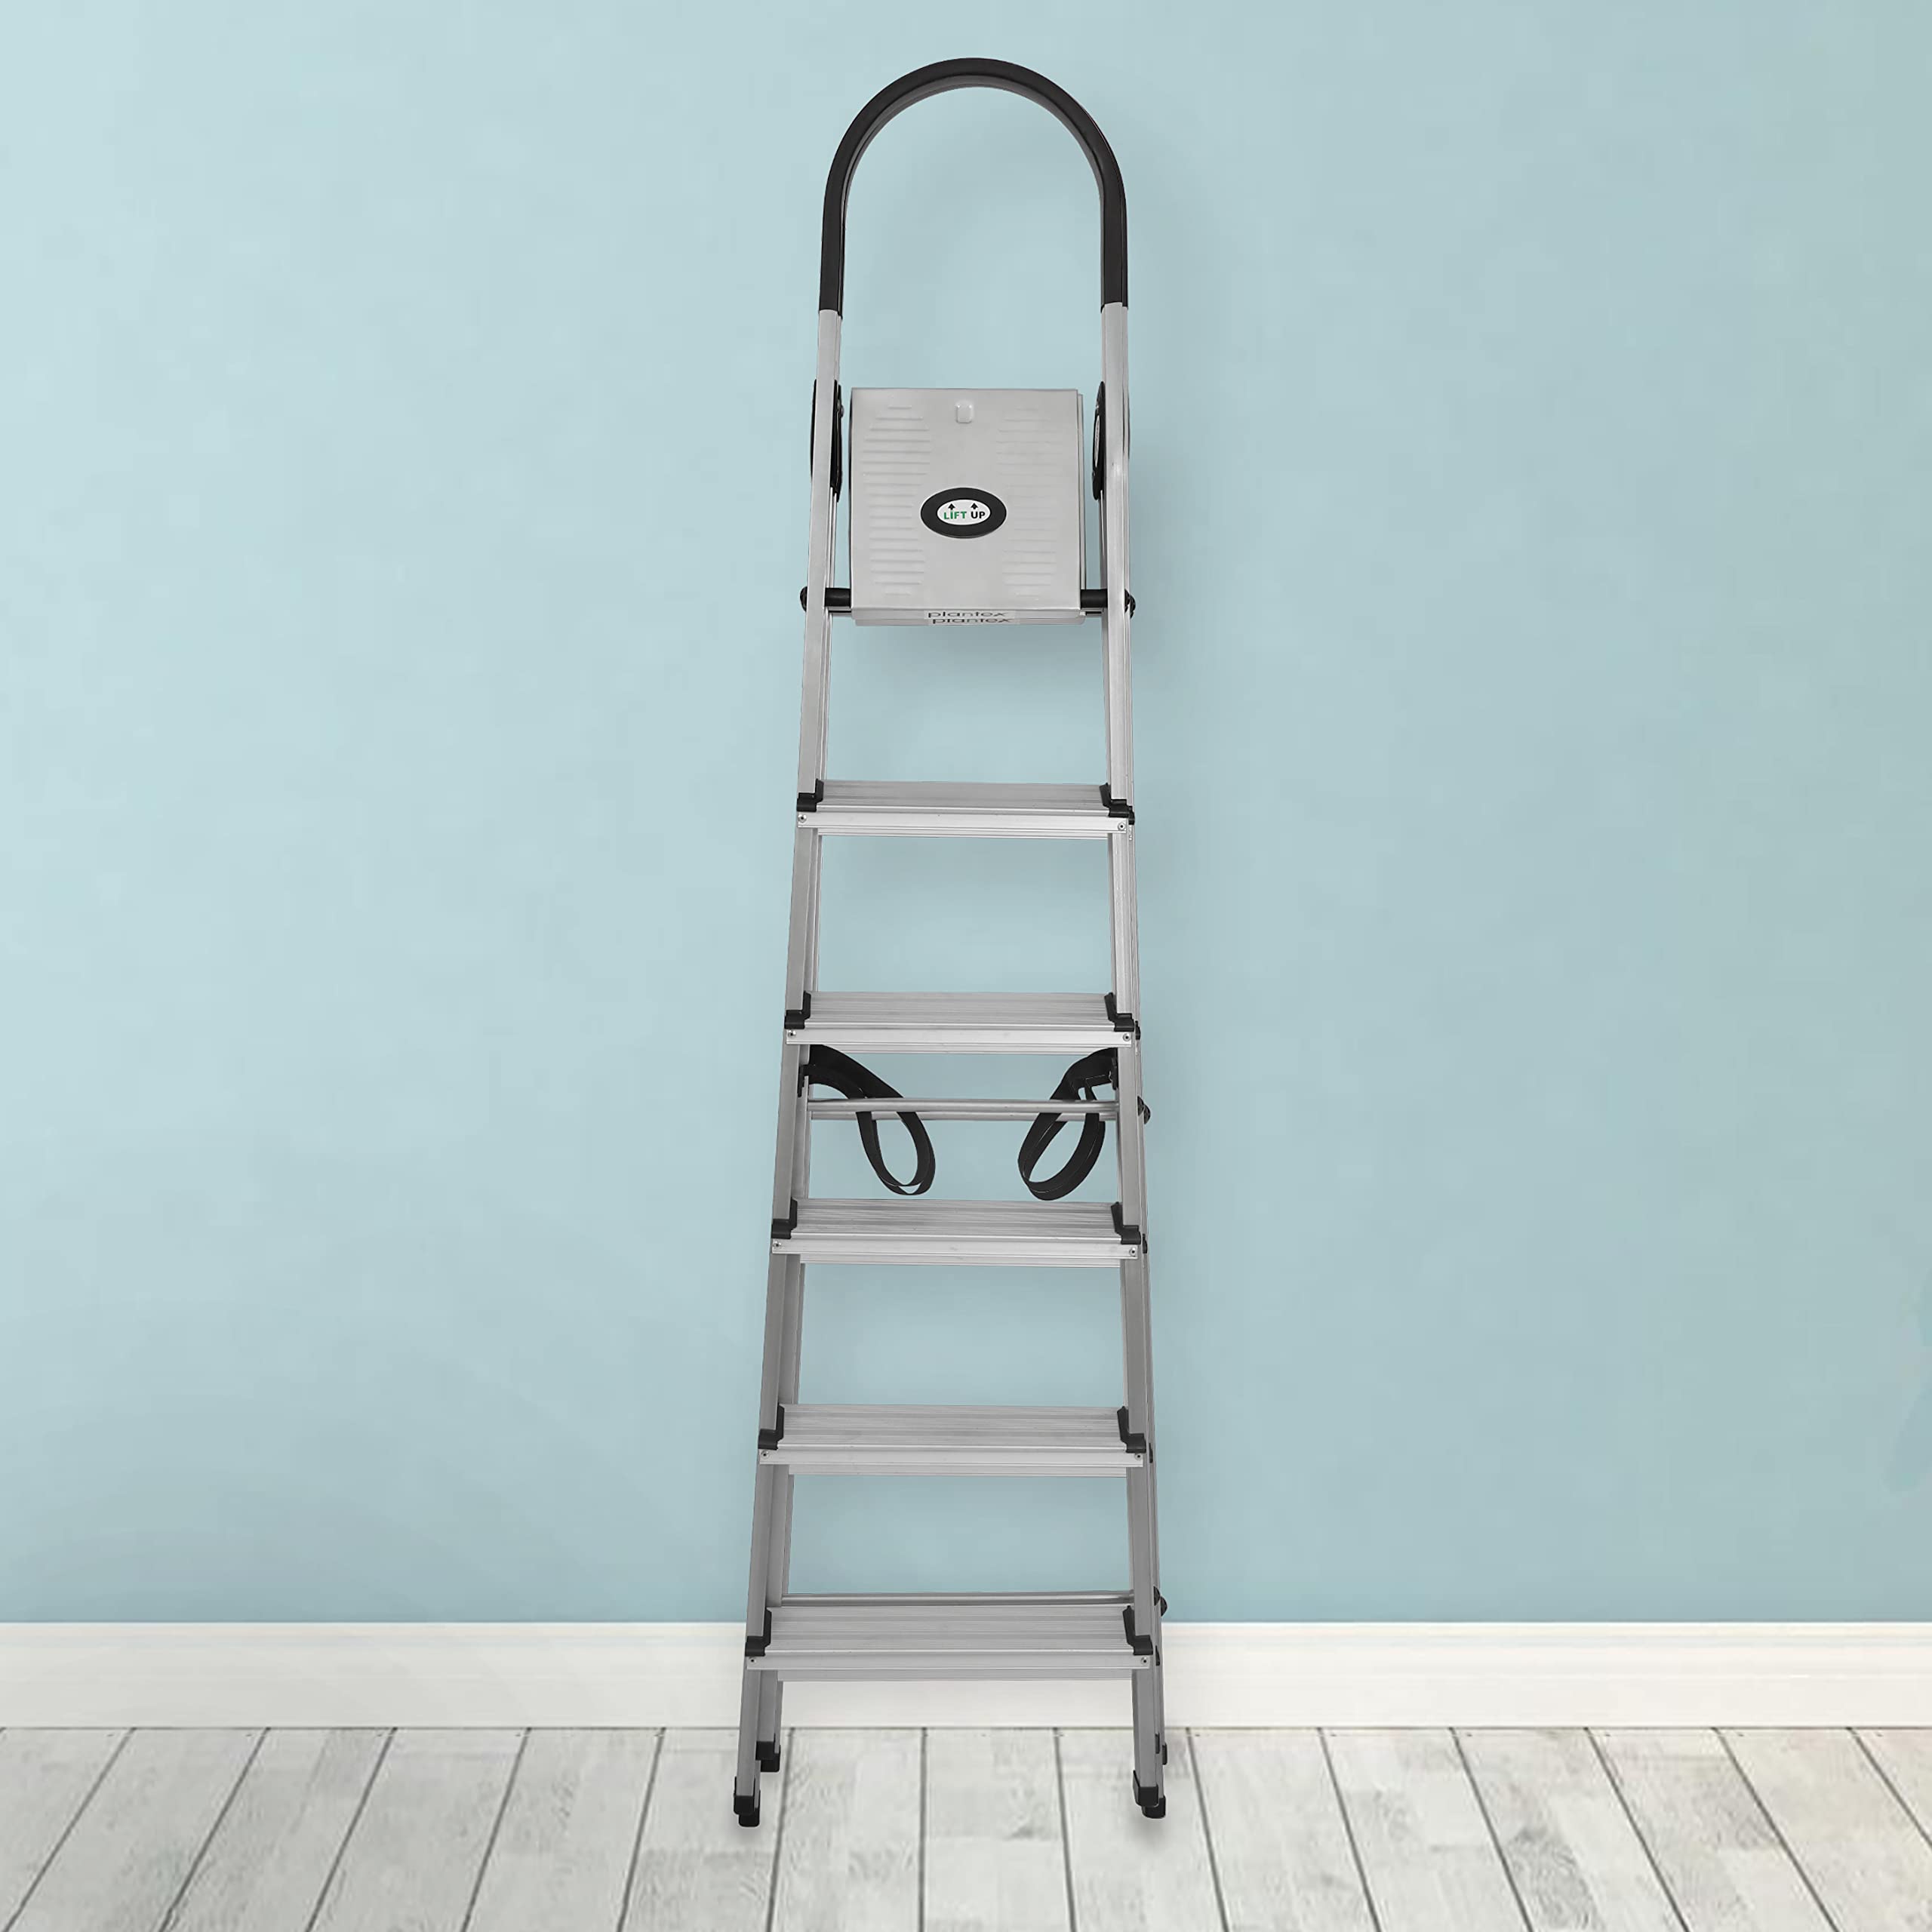 Plantex Wonder Aluminium Step Folding Ladder 6 Step for Home with Advanced Locking System - 6 Step Ladder (Silver & Black)